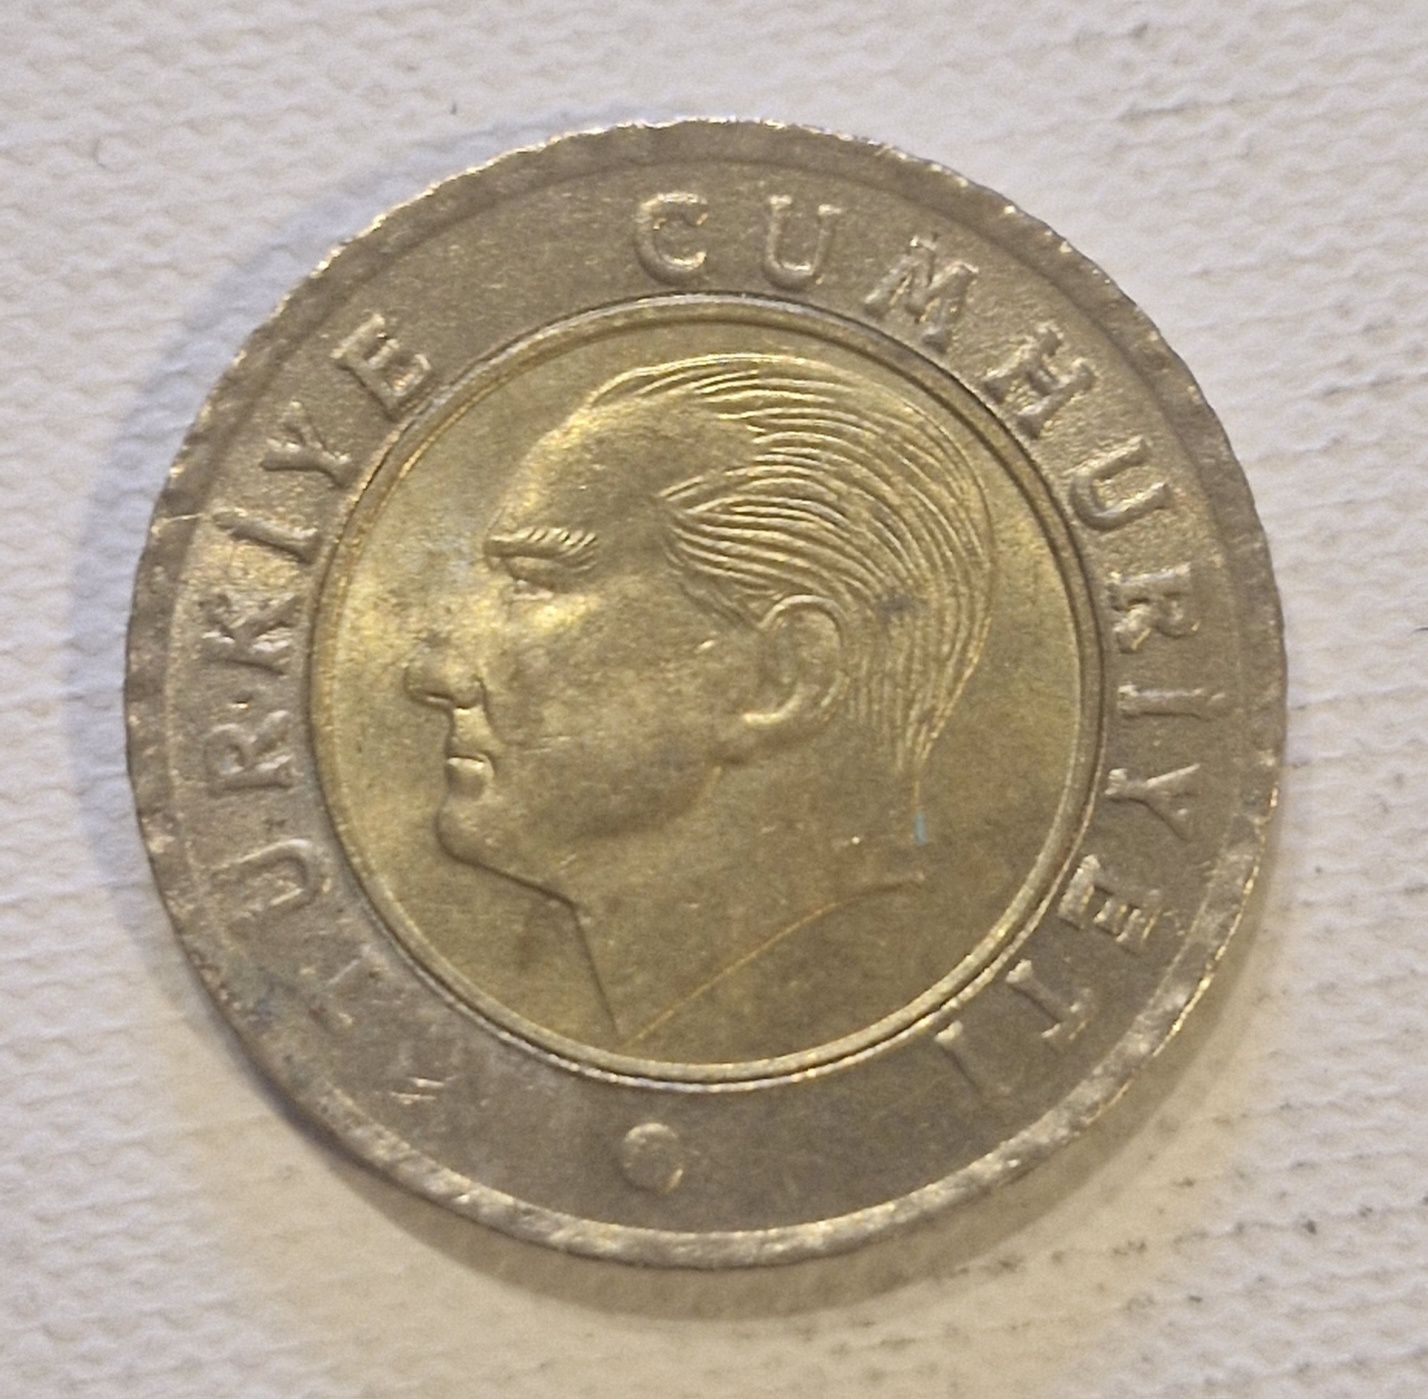 Moneta Turcja 2013.